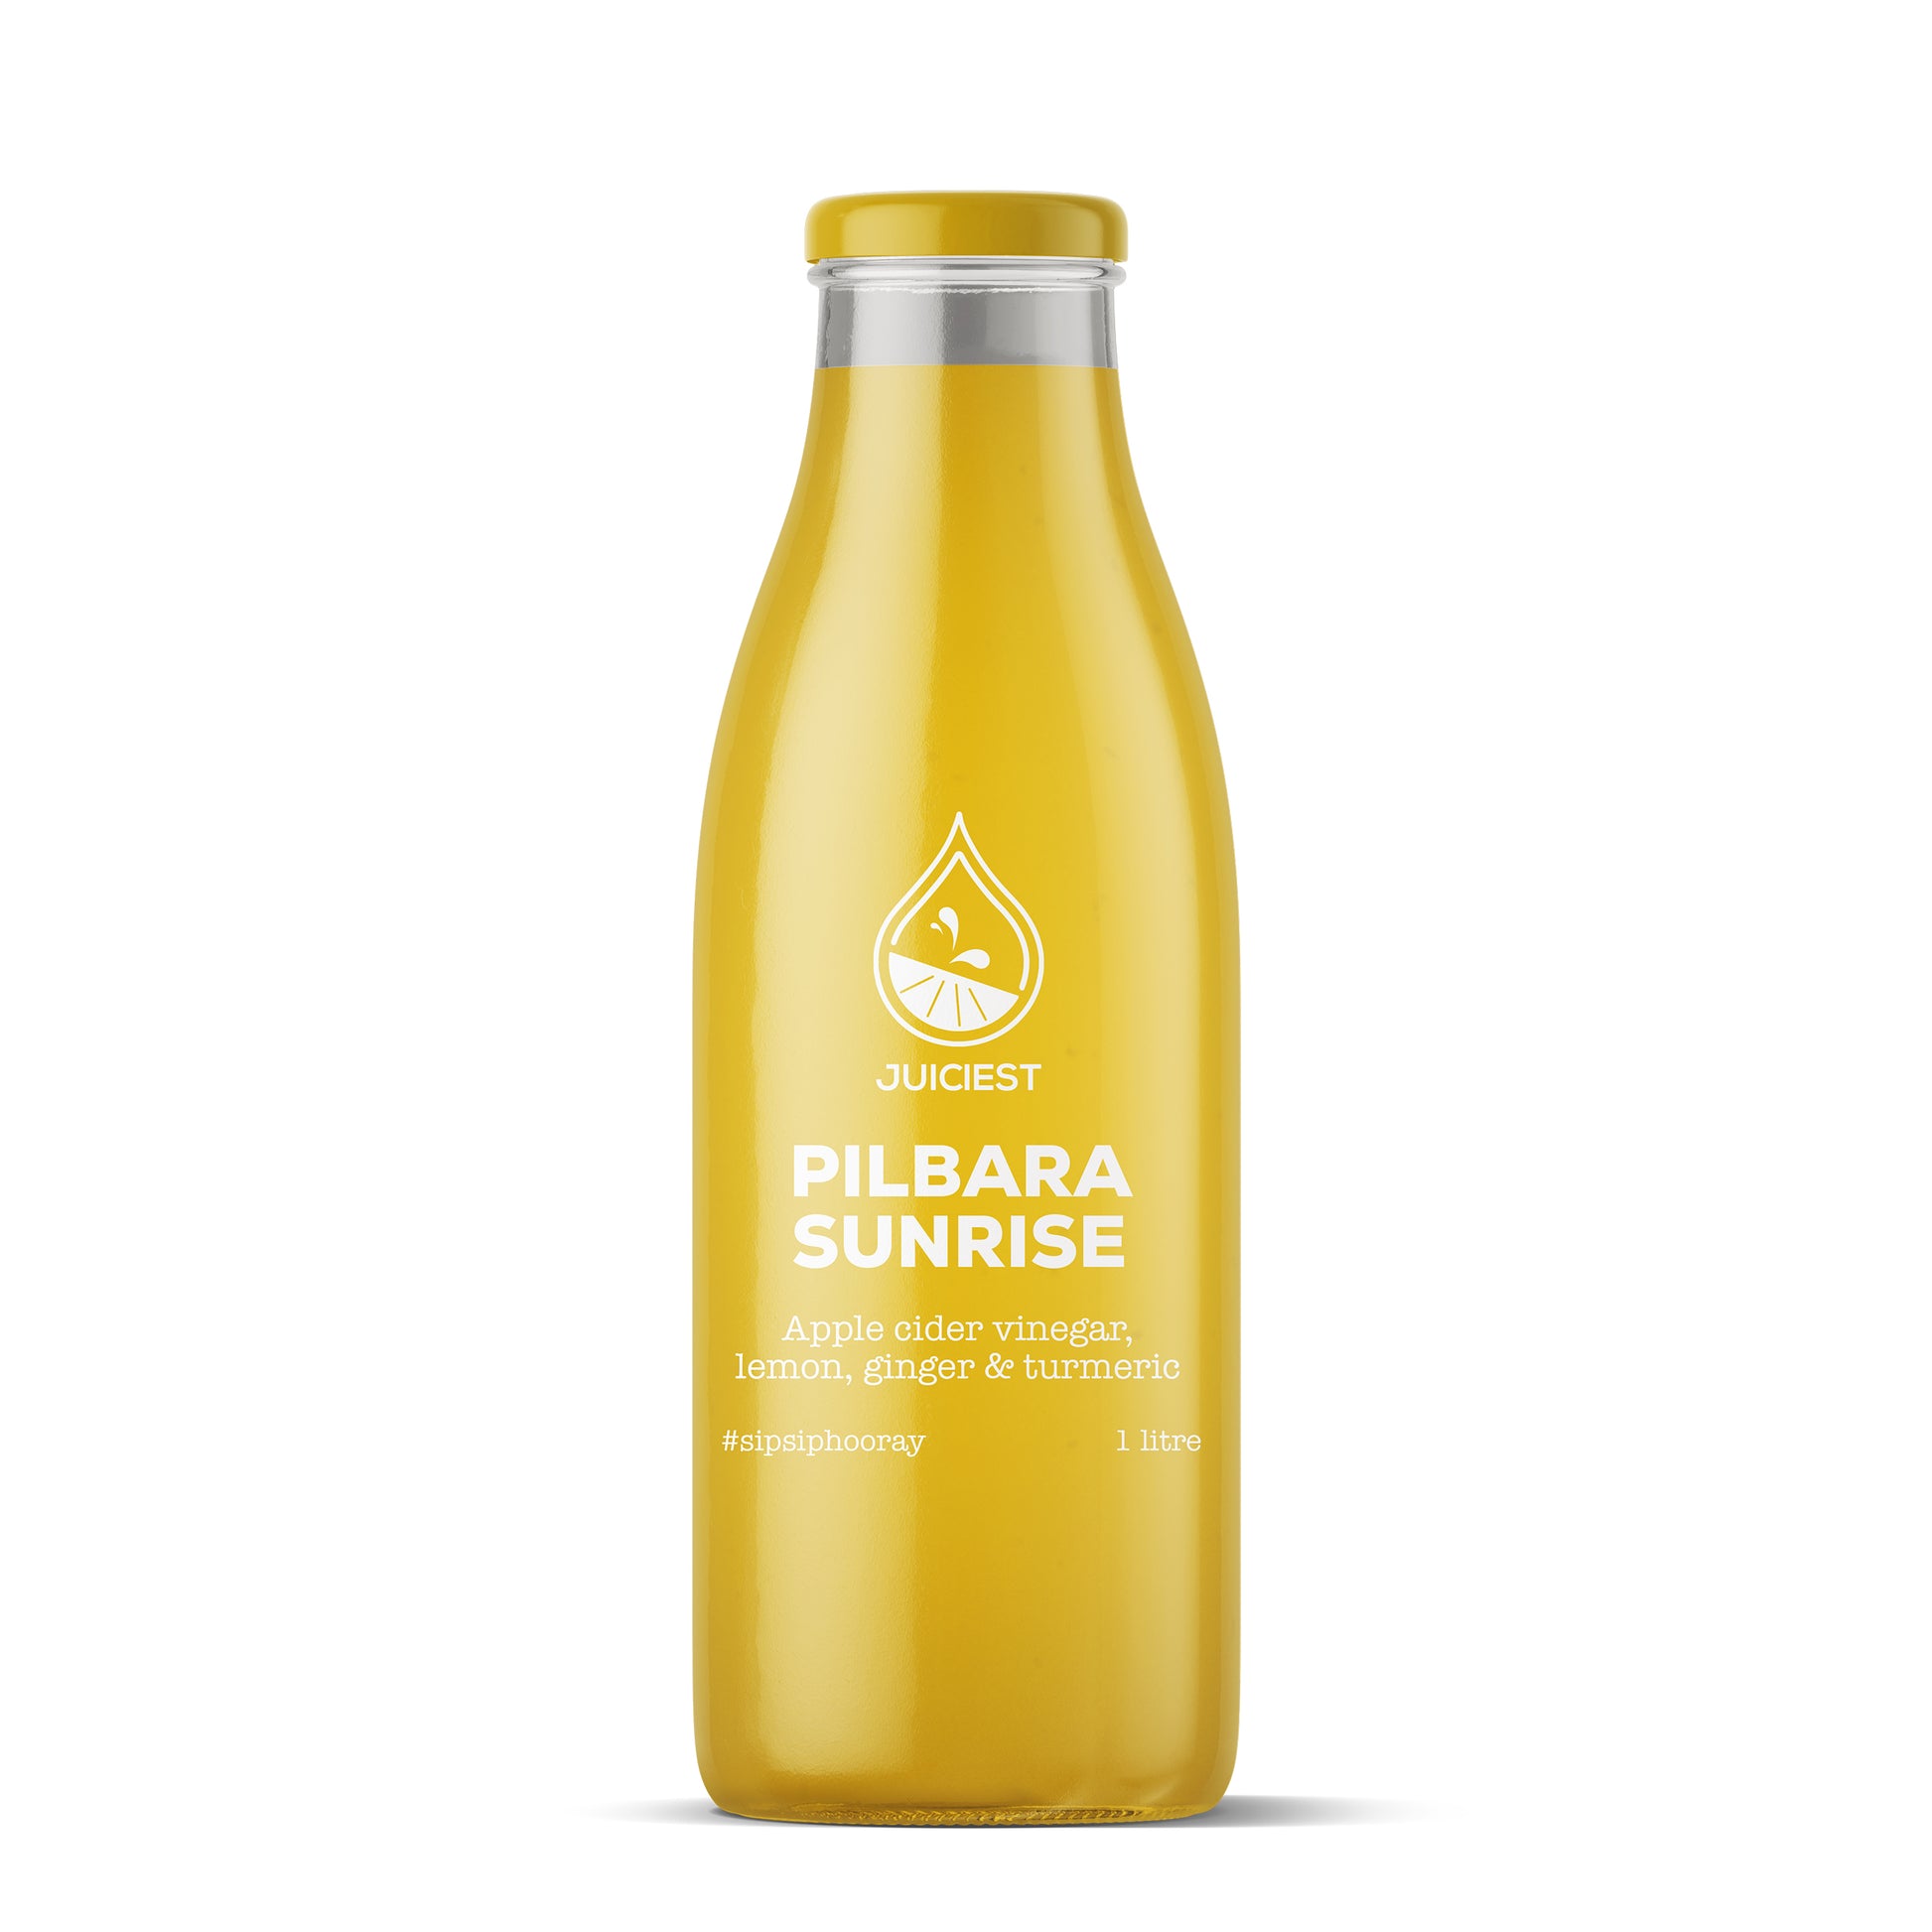 Juiciest Pilbara Sunrise 1L bottle